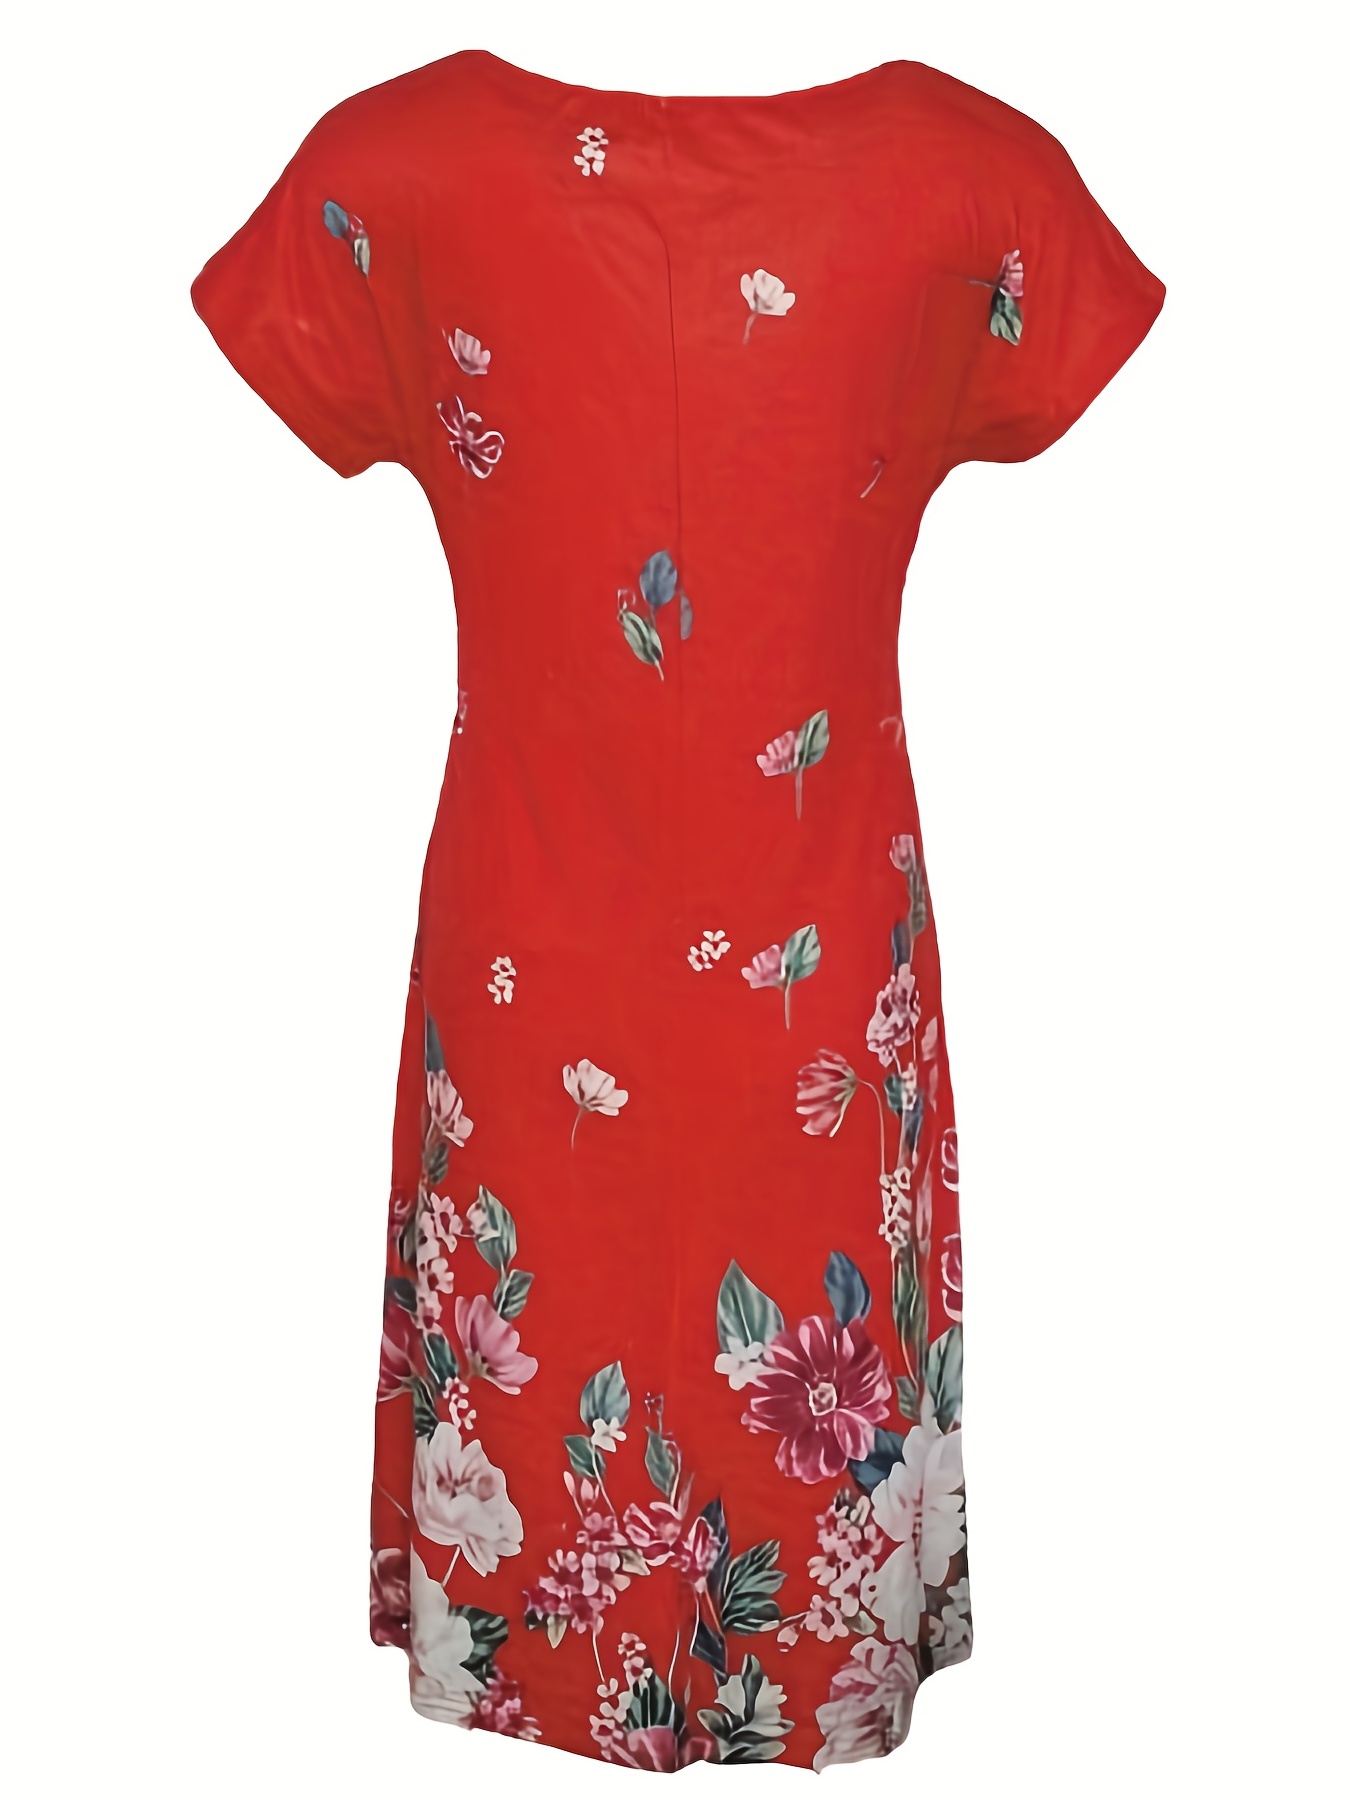 retro floral print dress short sleeve v neck dress casual dress for summer spring womens clothing